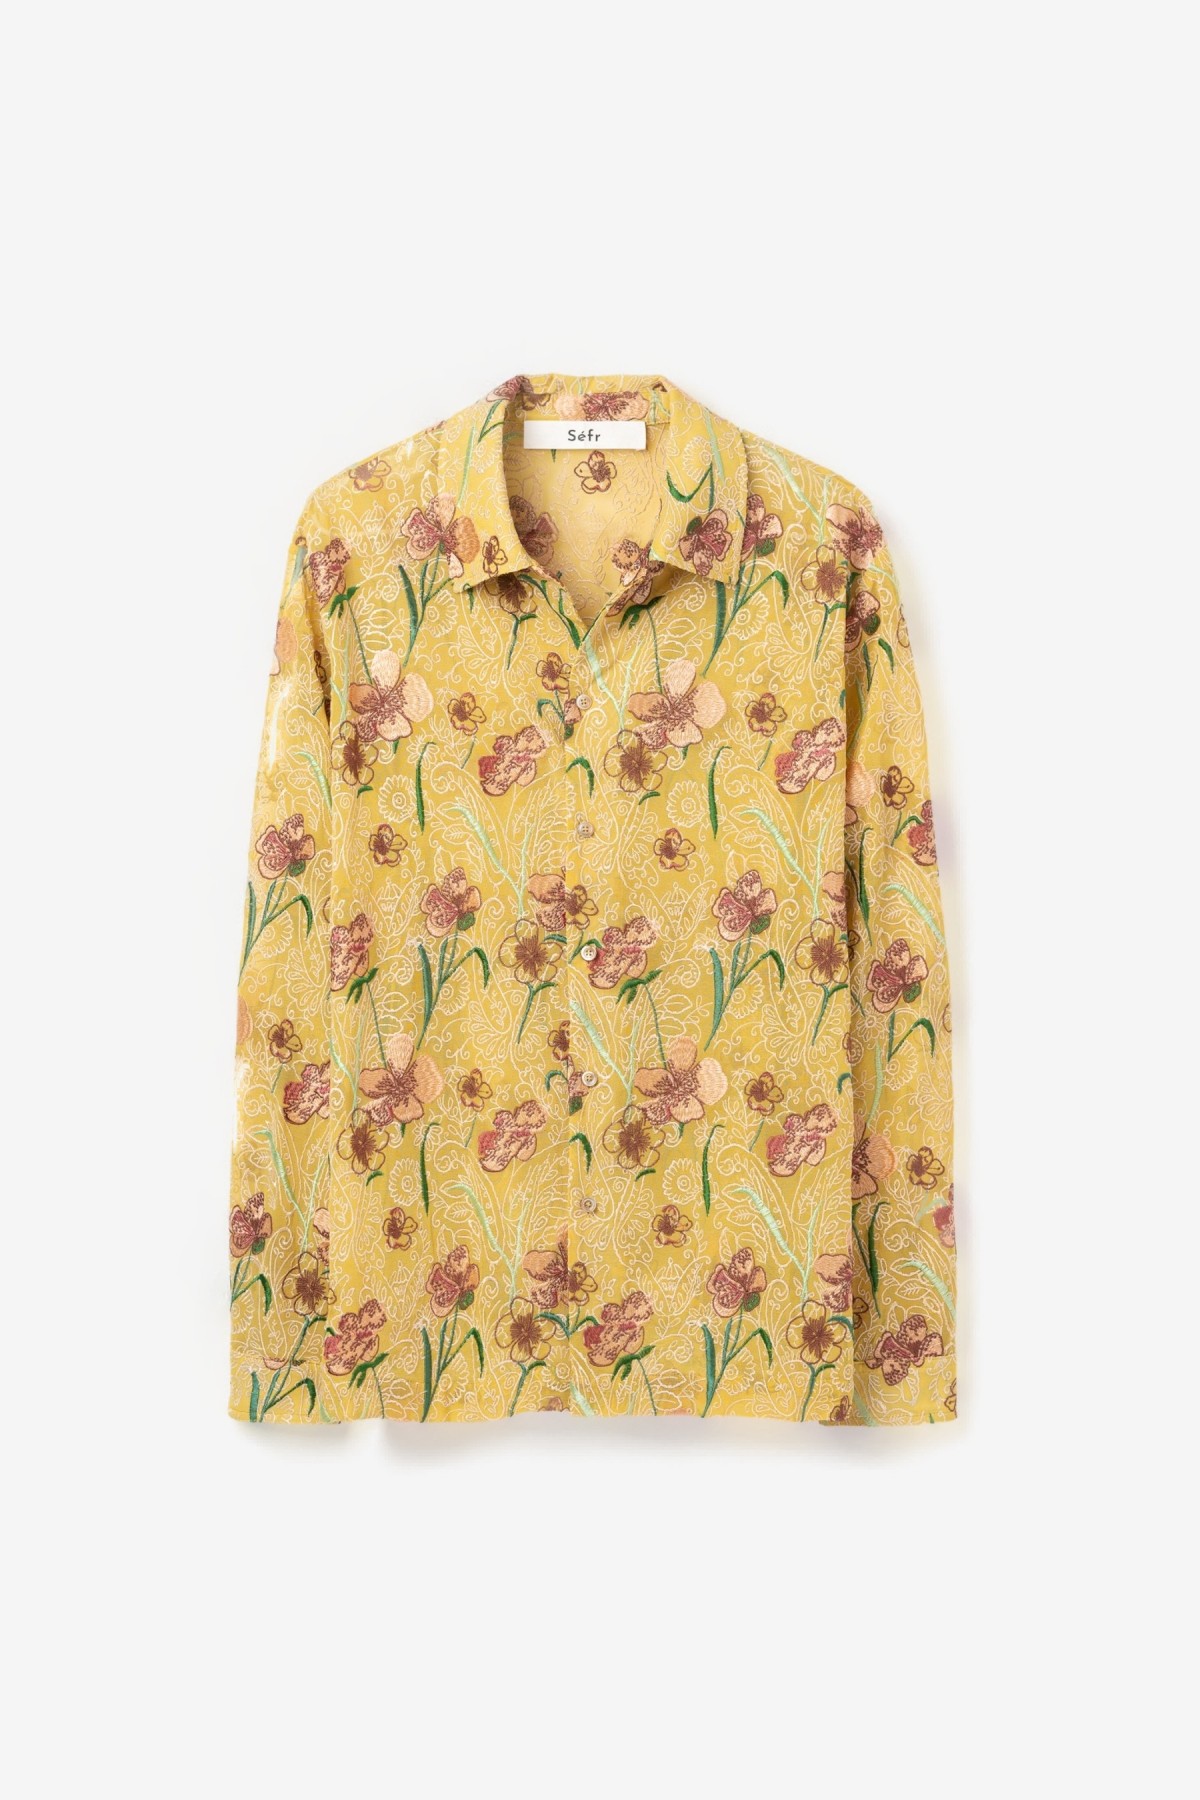 Séfr Ripley Shirt in Hibiscus Yellow